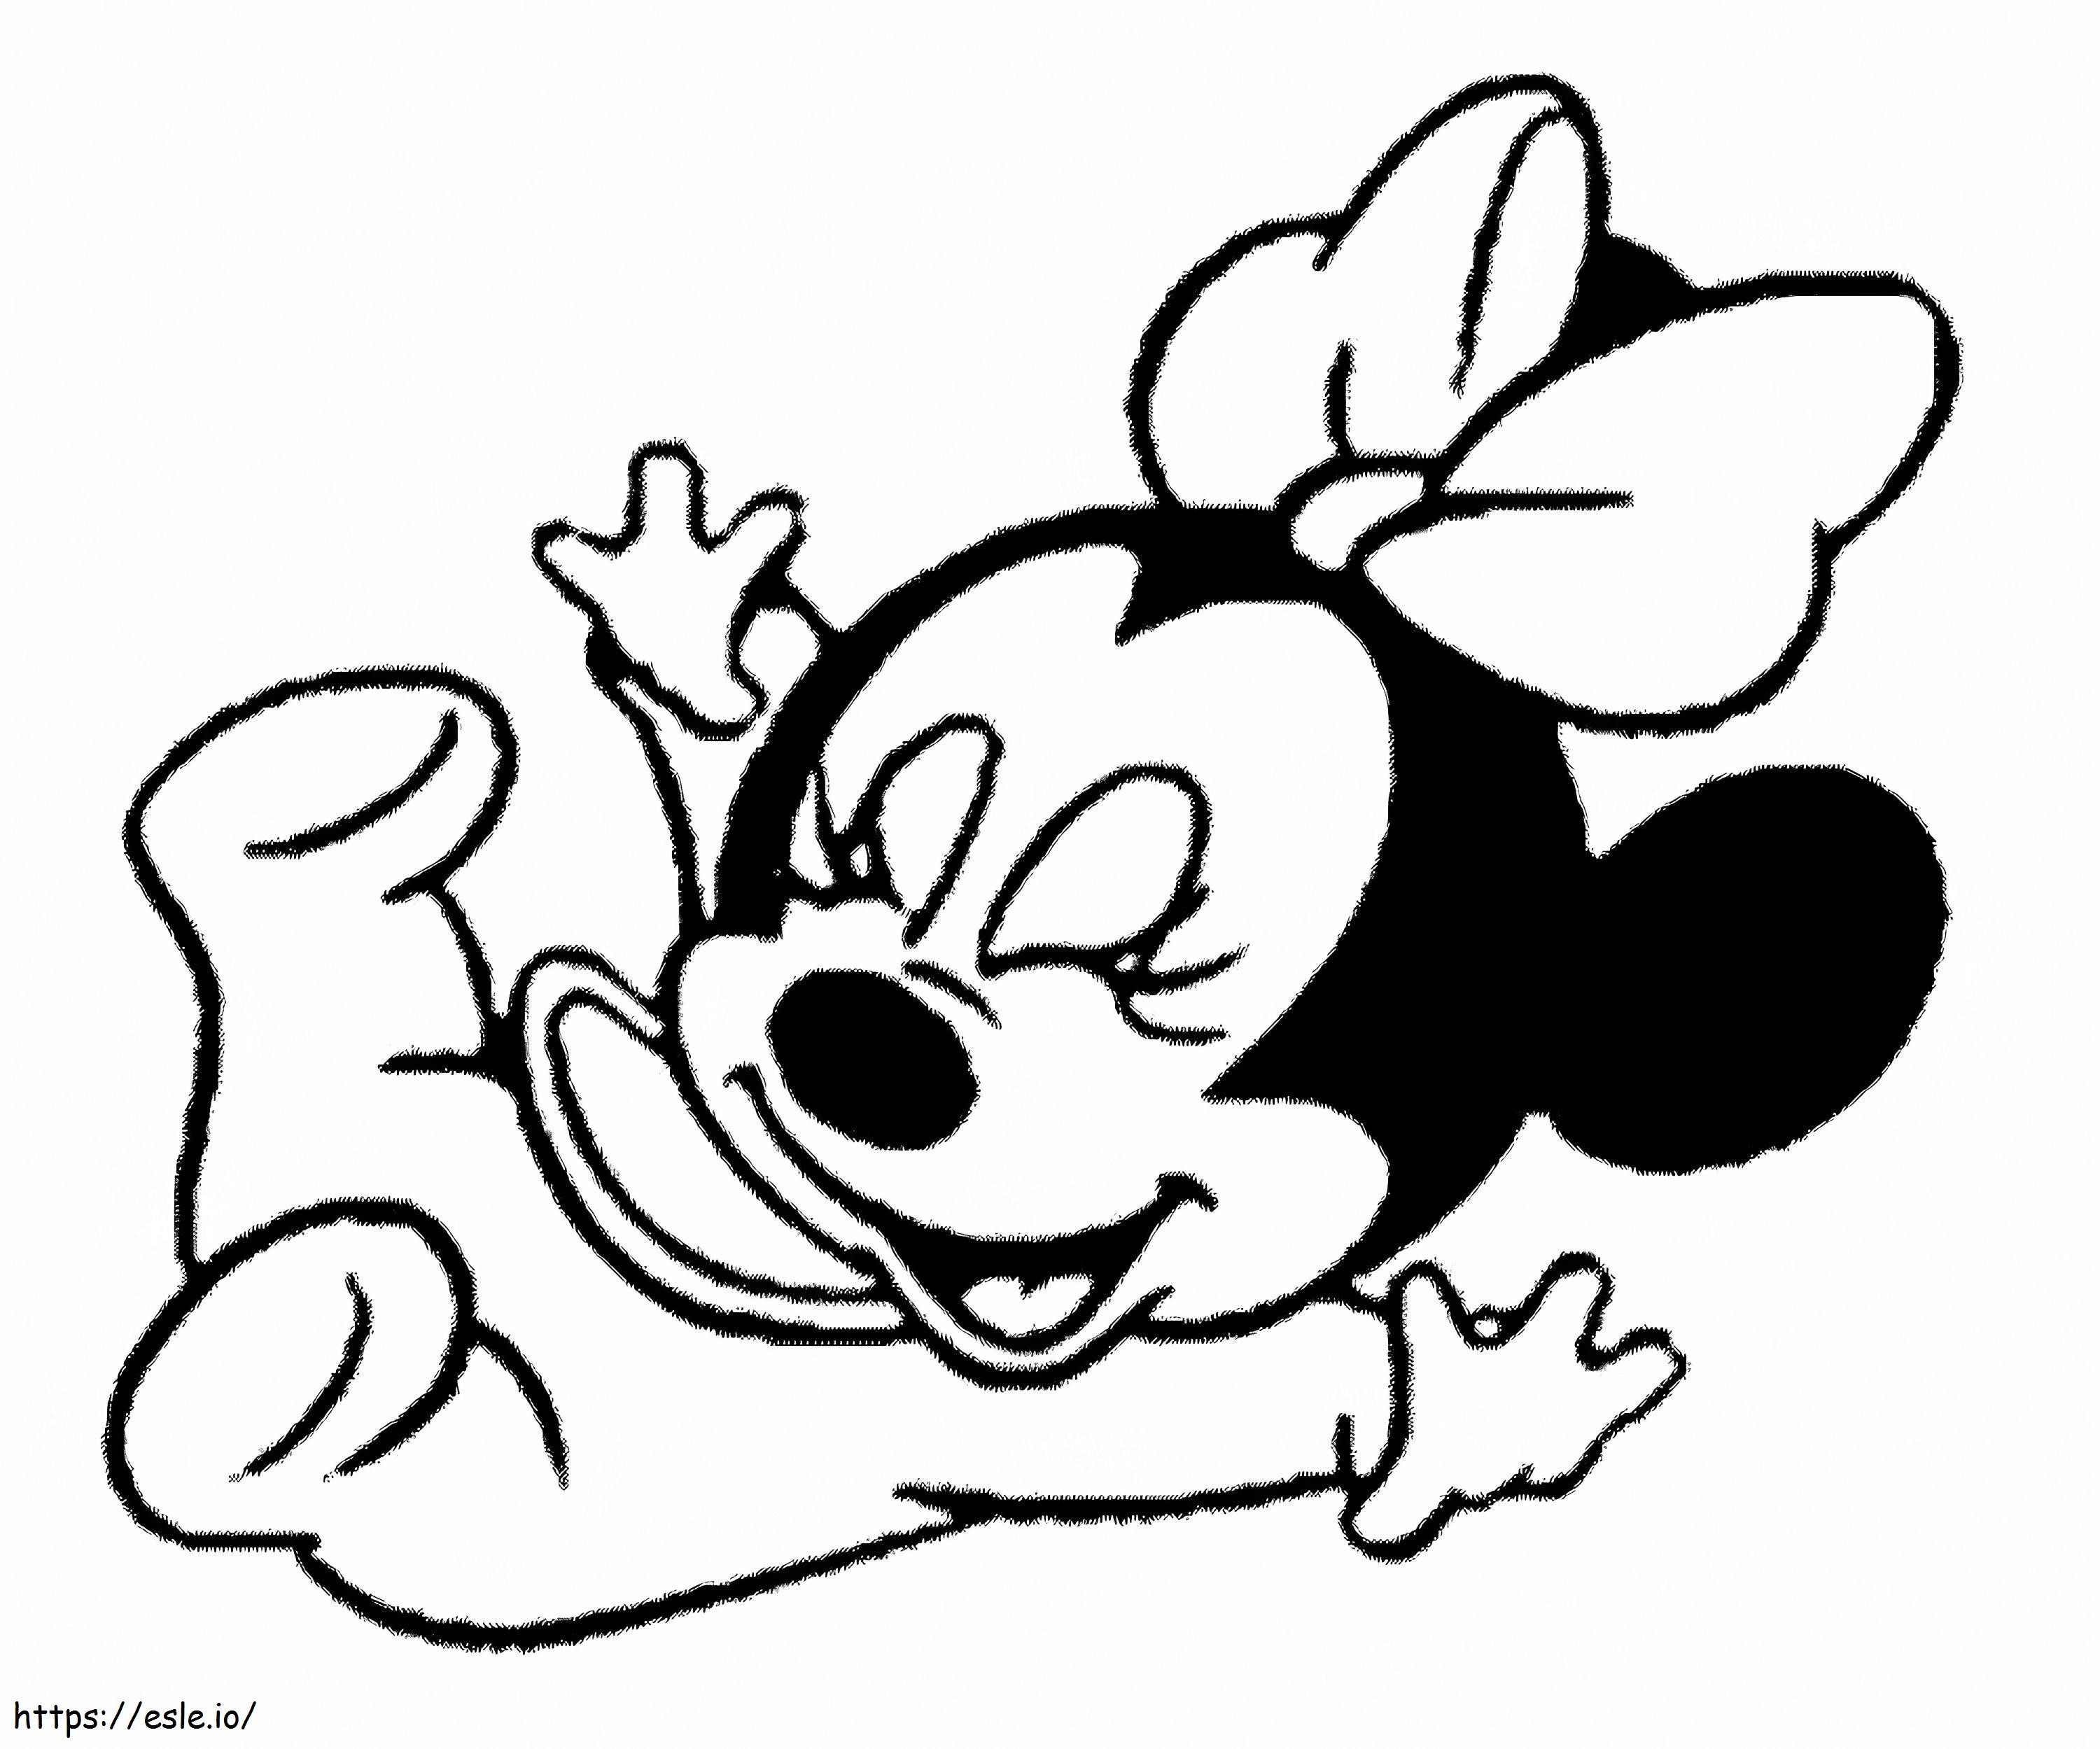 Bebé divertido Minnie Mouse para colorear